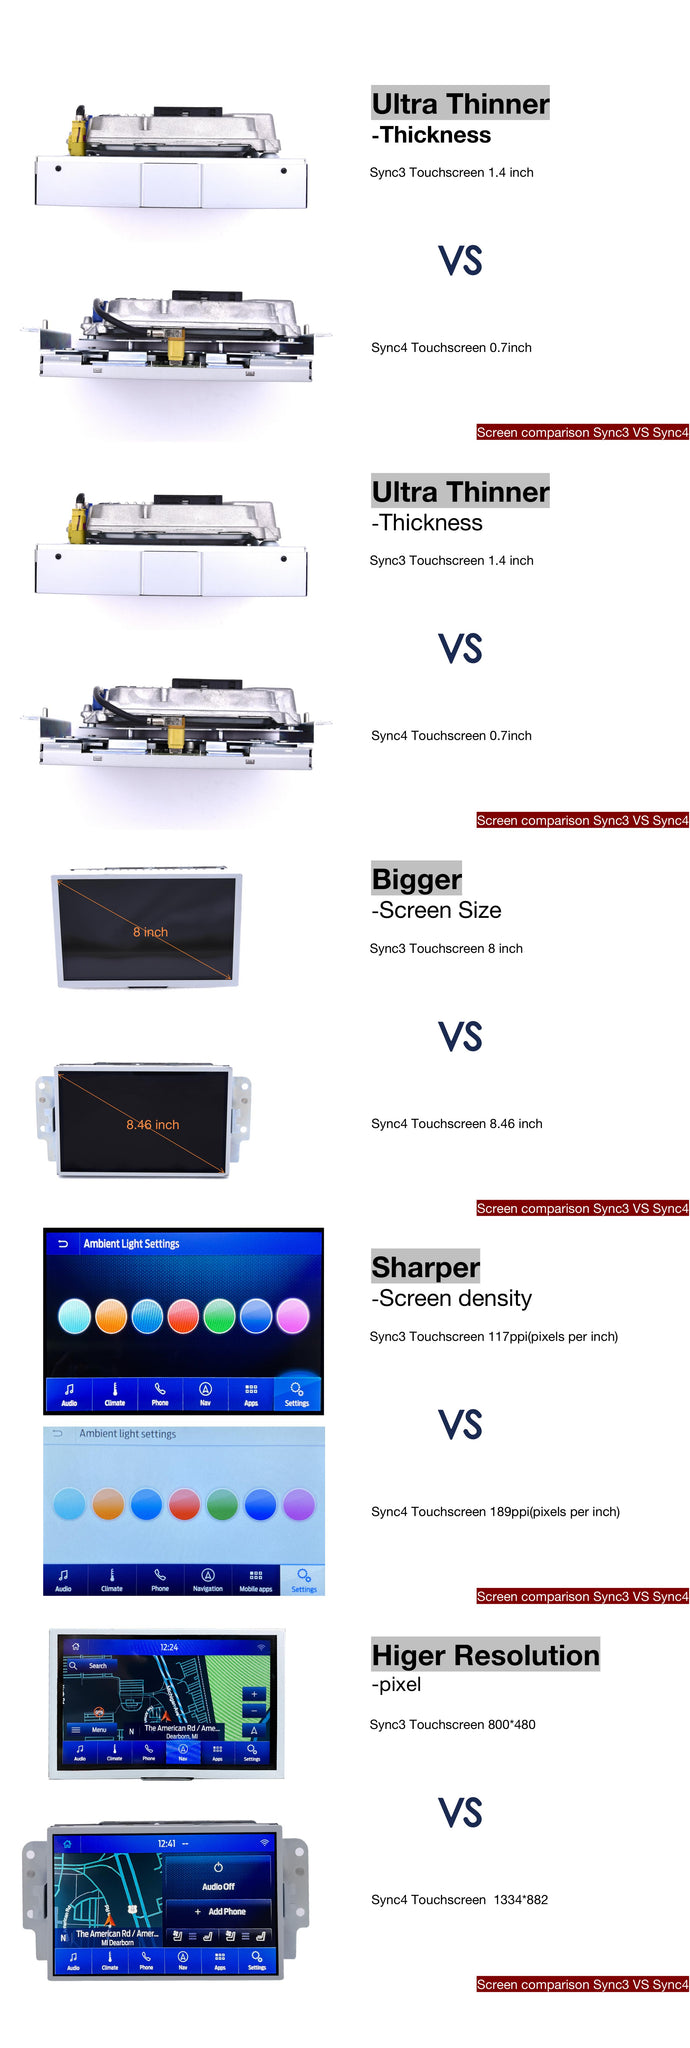 sync3 touchscreen vs sync4 touchscreen